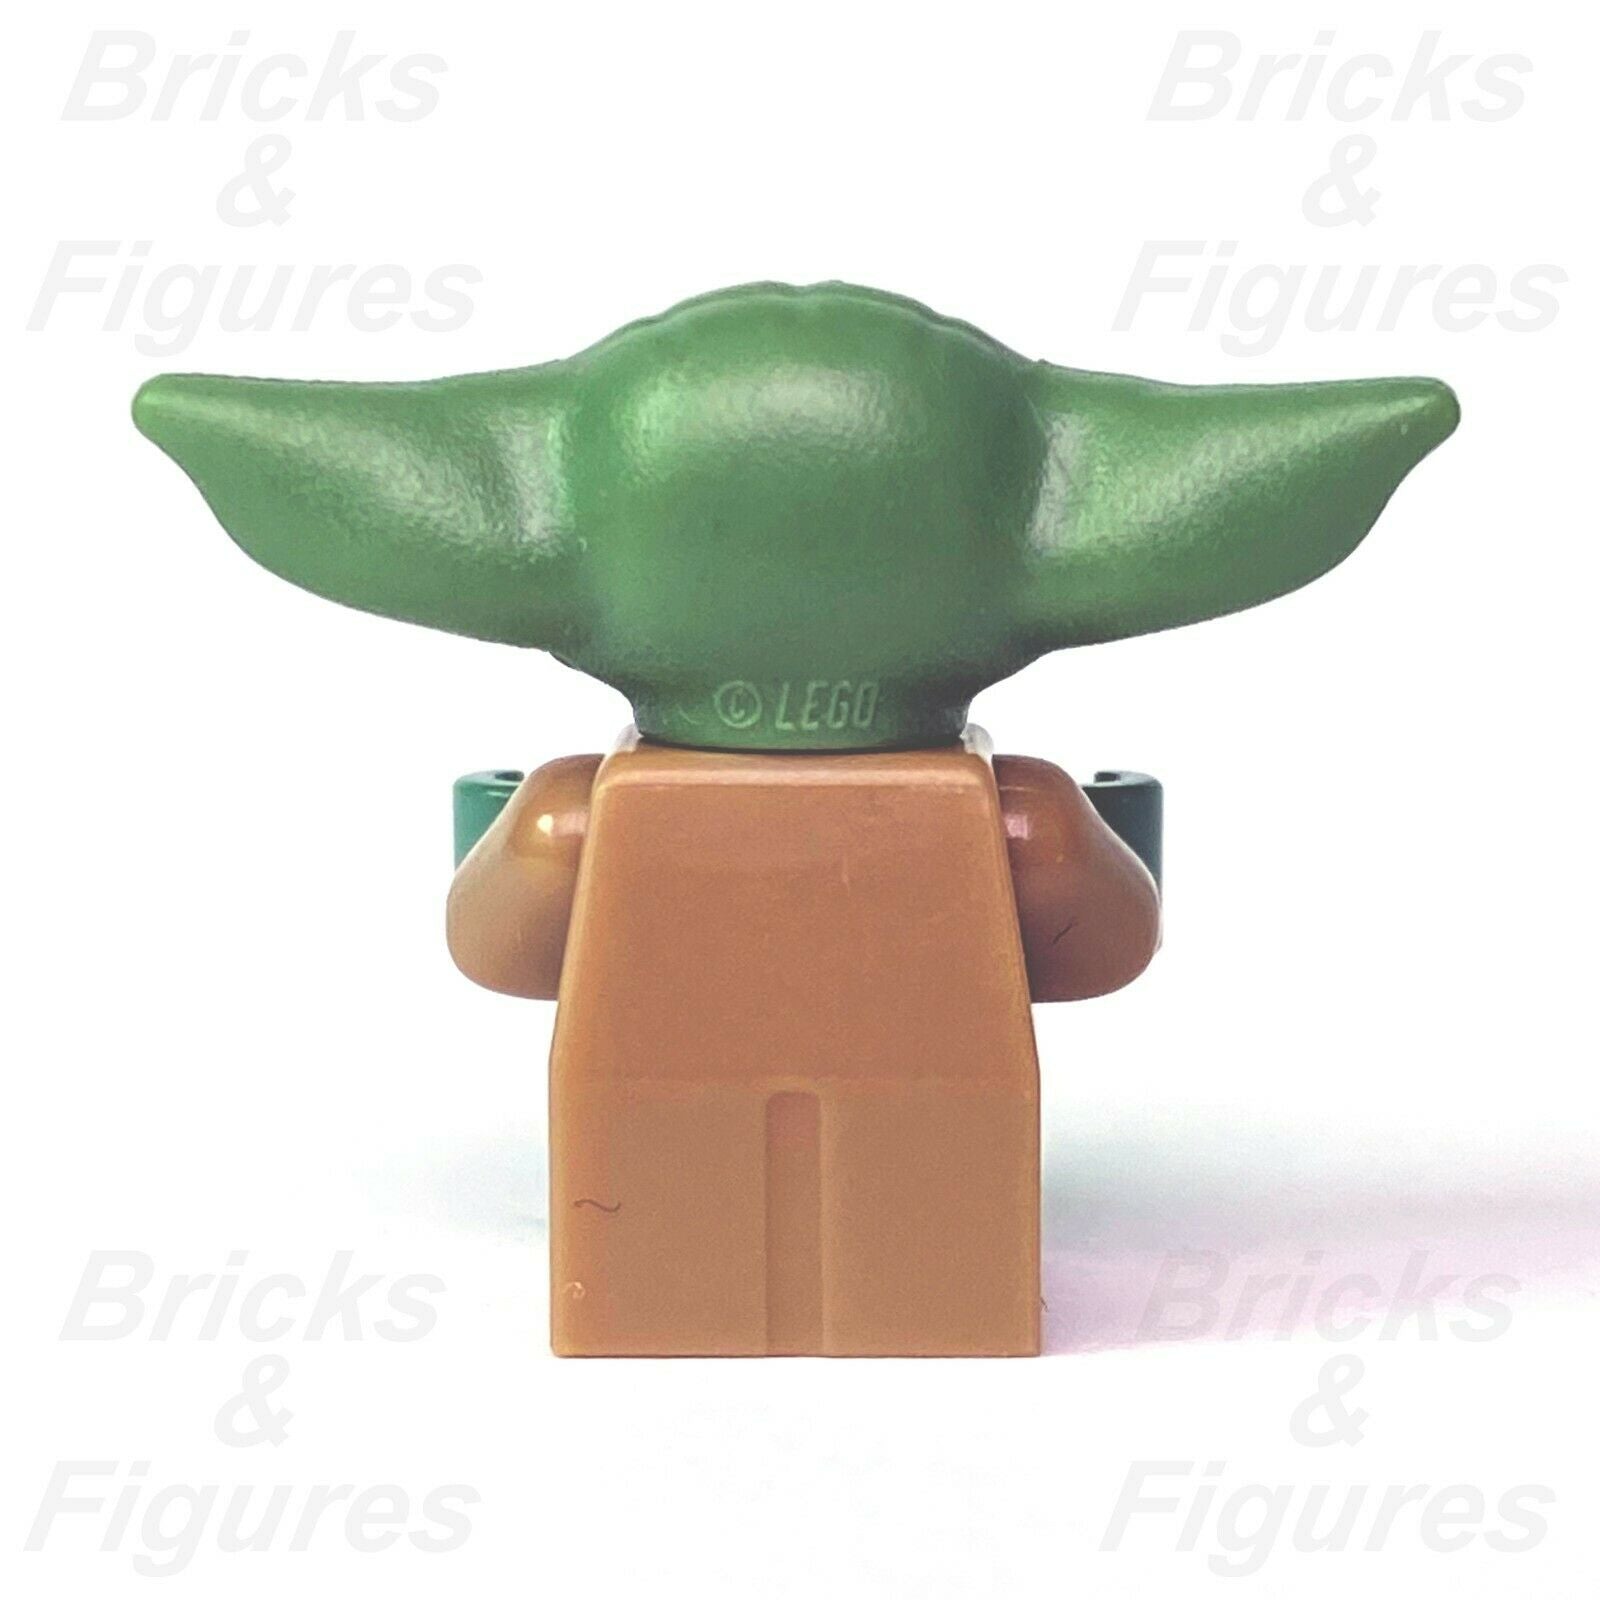 LEGO® Star Wars Grogu Minifigure Baby Yoda Red Christmas Top